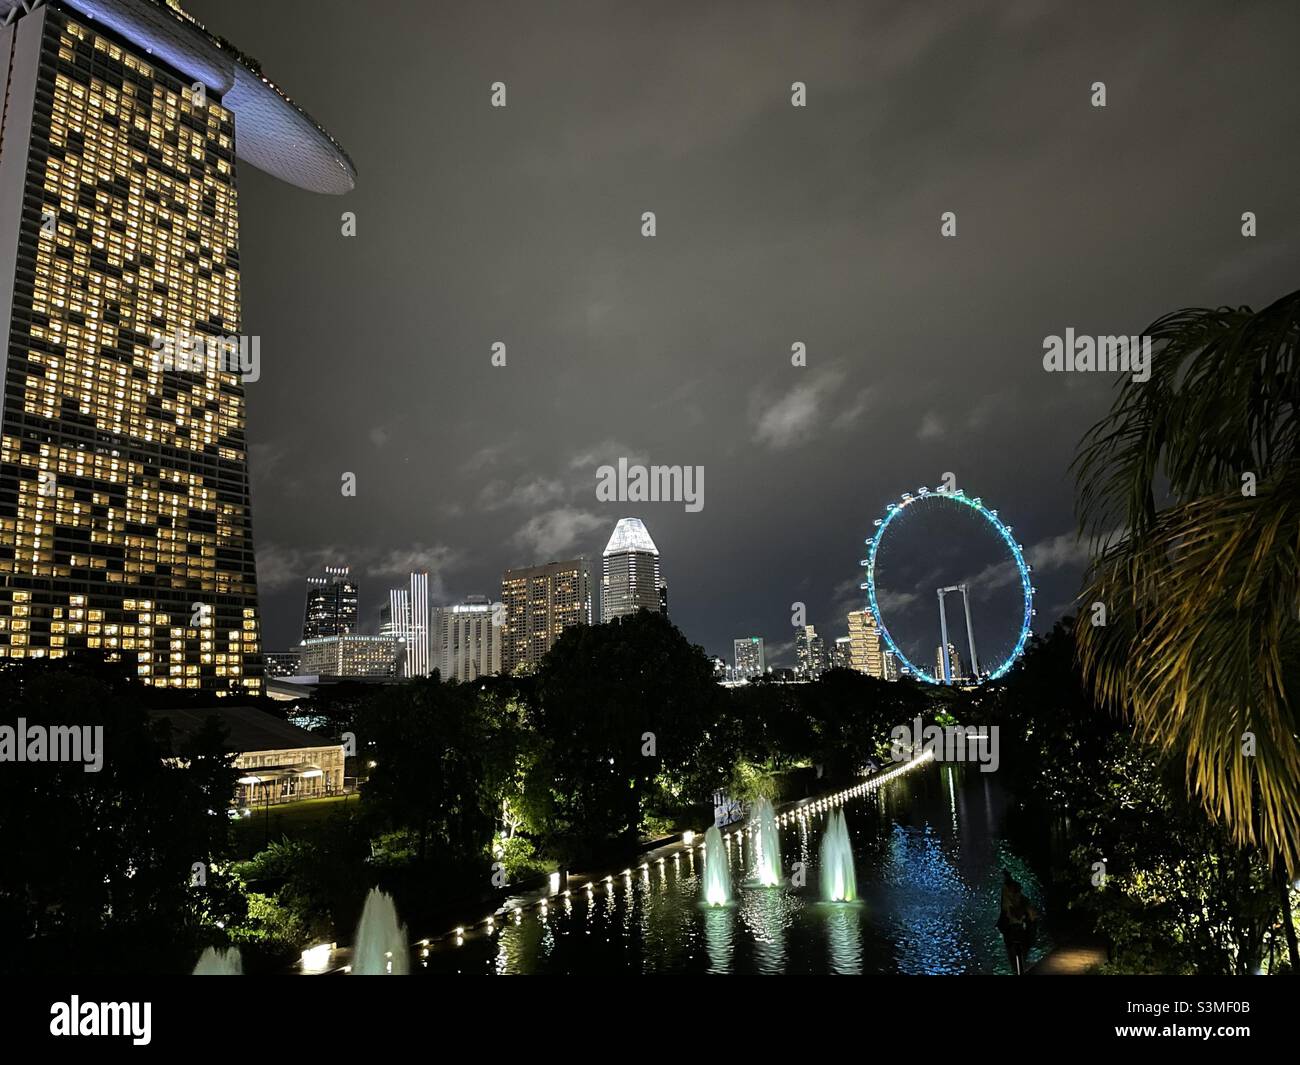 Singapore night scenery Stock Photo